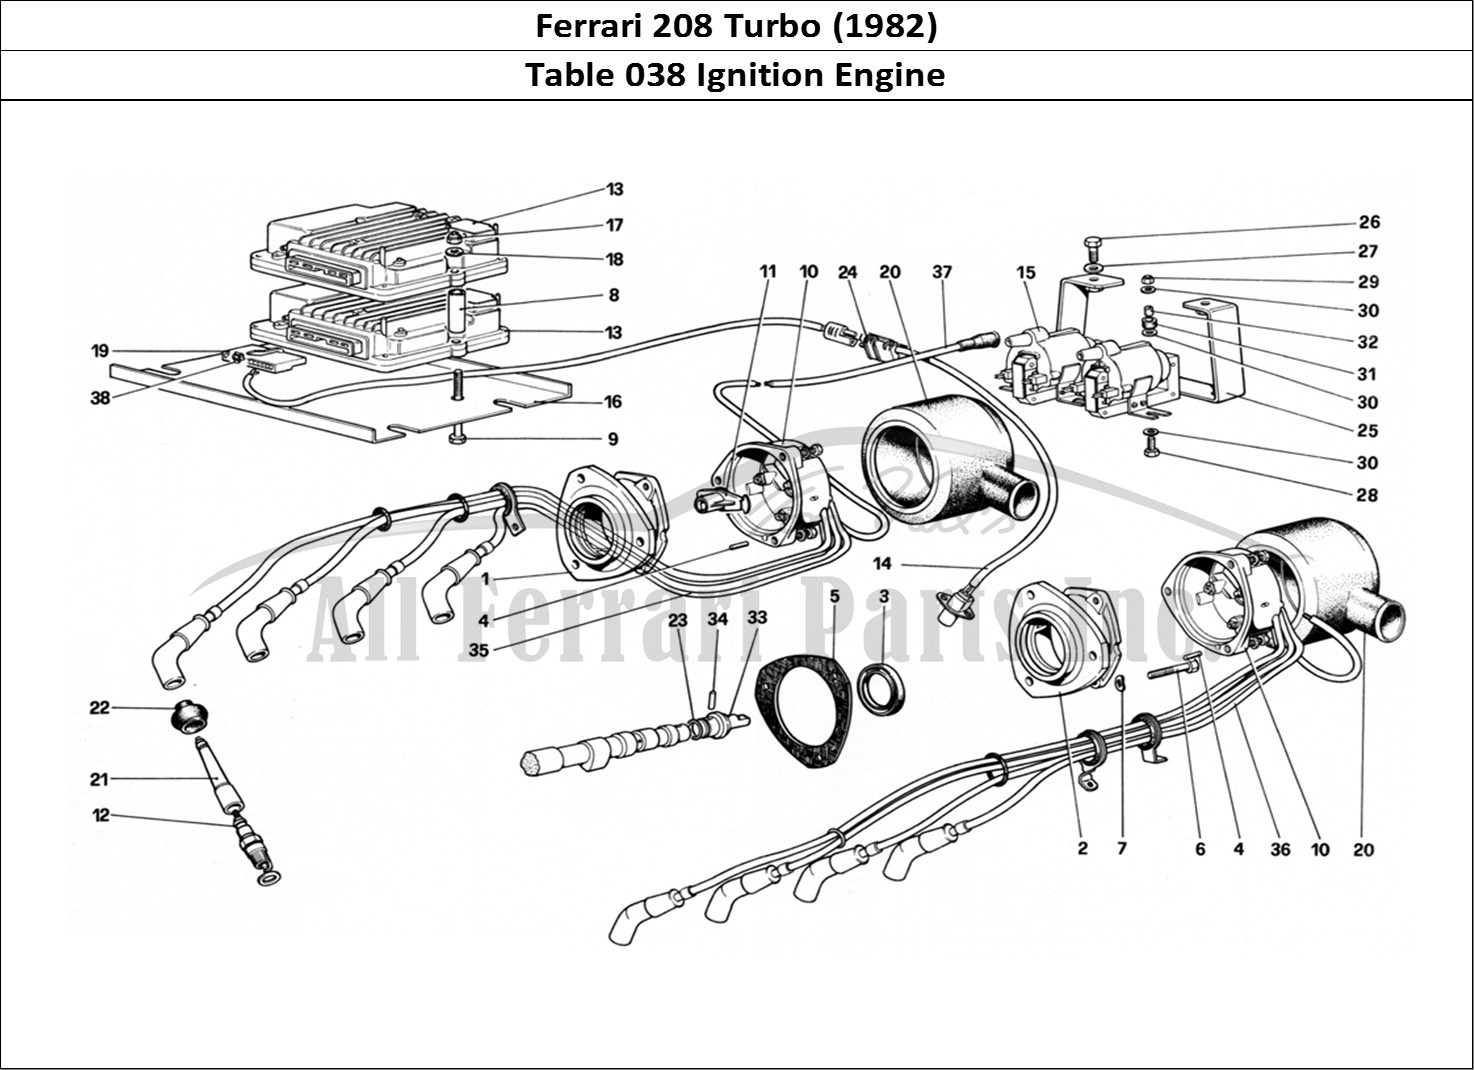 Ferrari Parts Ferrari 208 Turbo (1982) Page 038 Engine Ignition